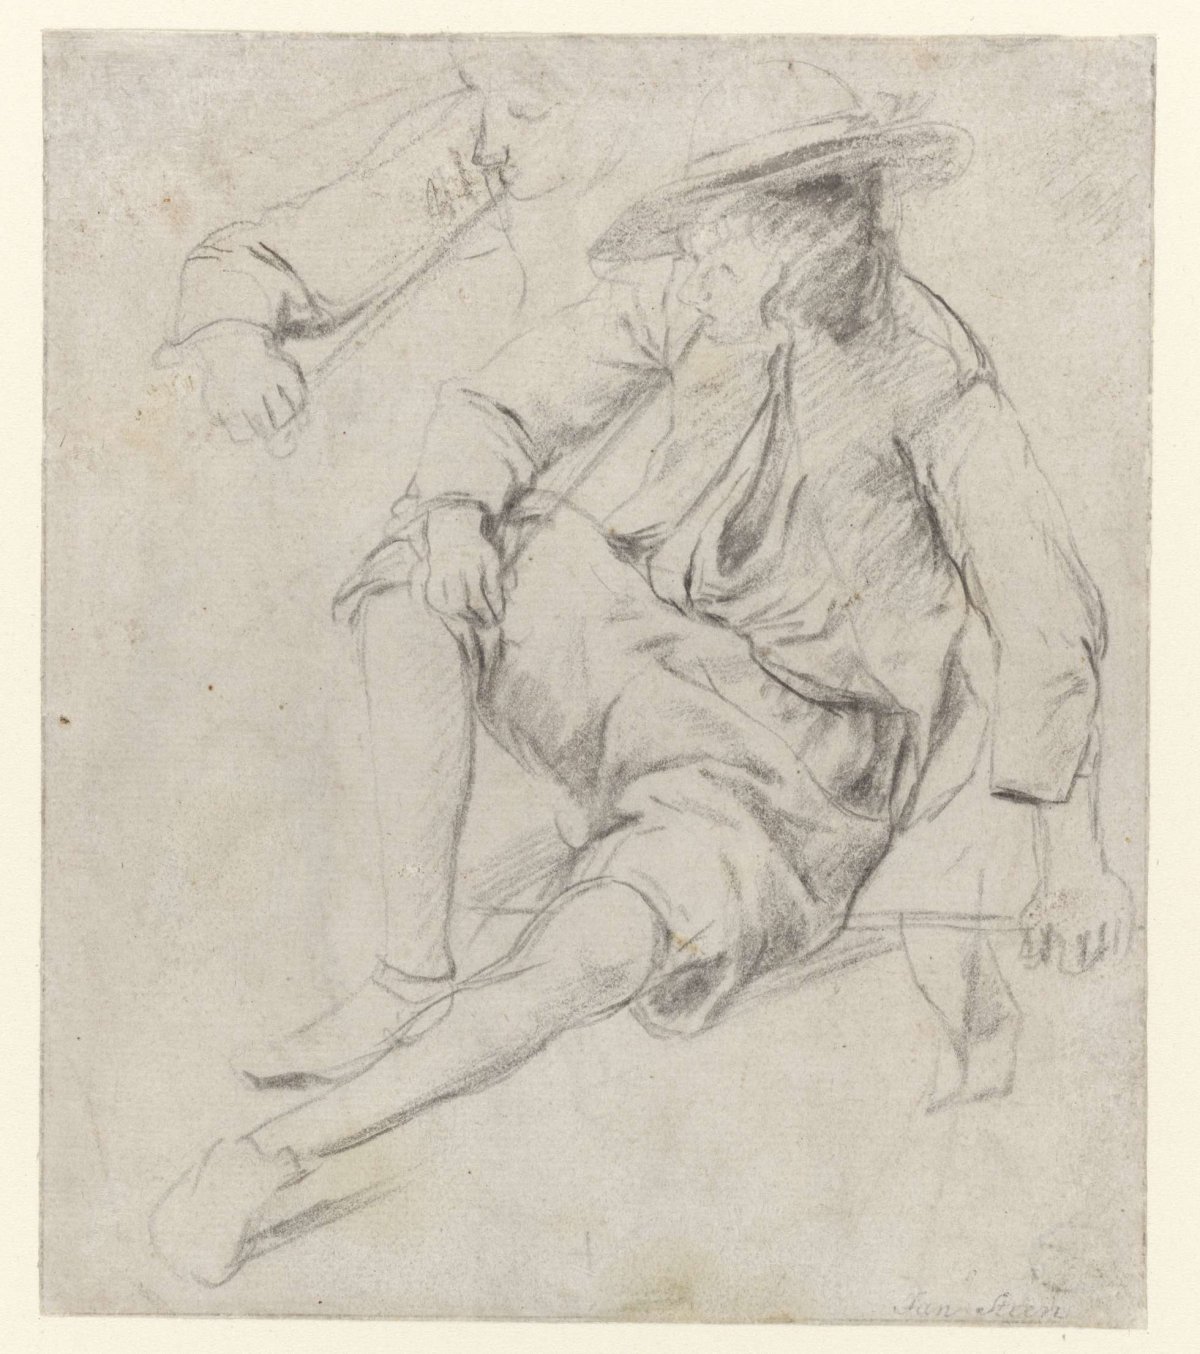 Study of a Seated Man Smoking a Pipe, Jan Havicksz. Steen, c. 1650 - c. 1655